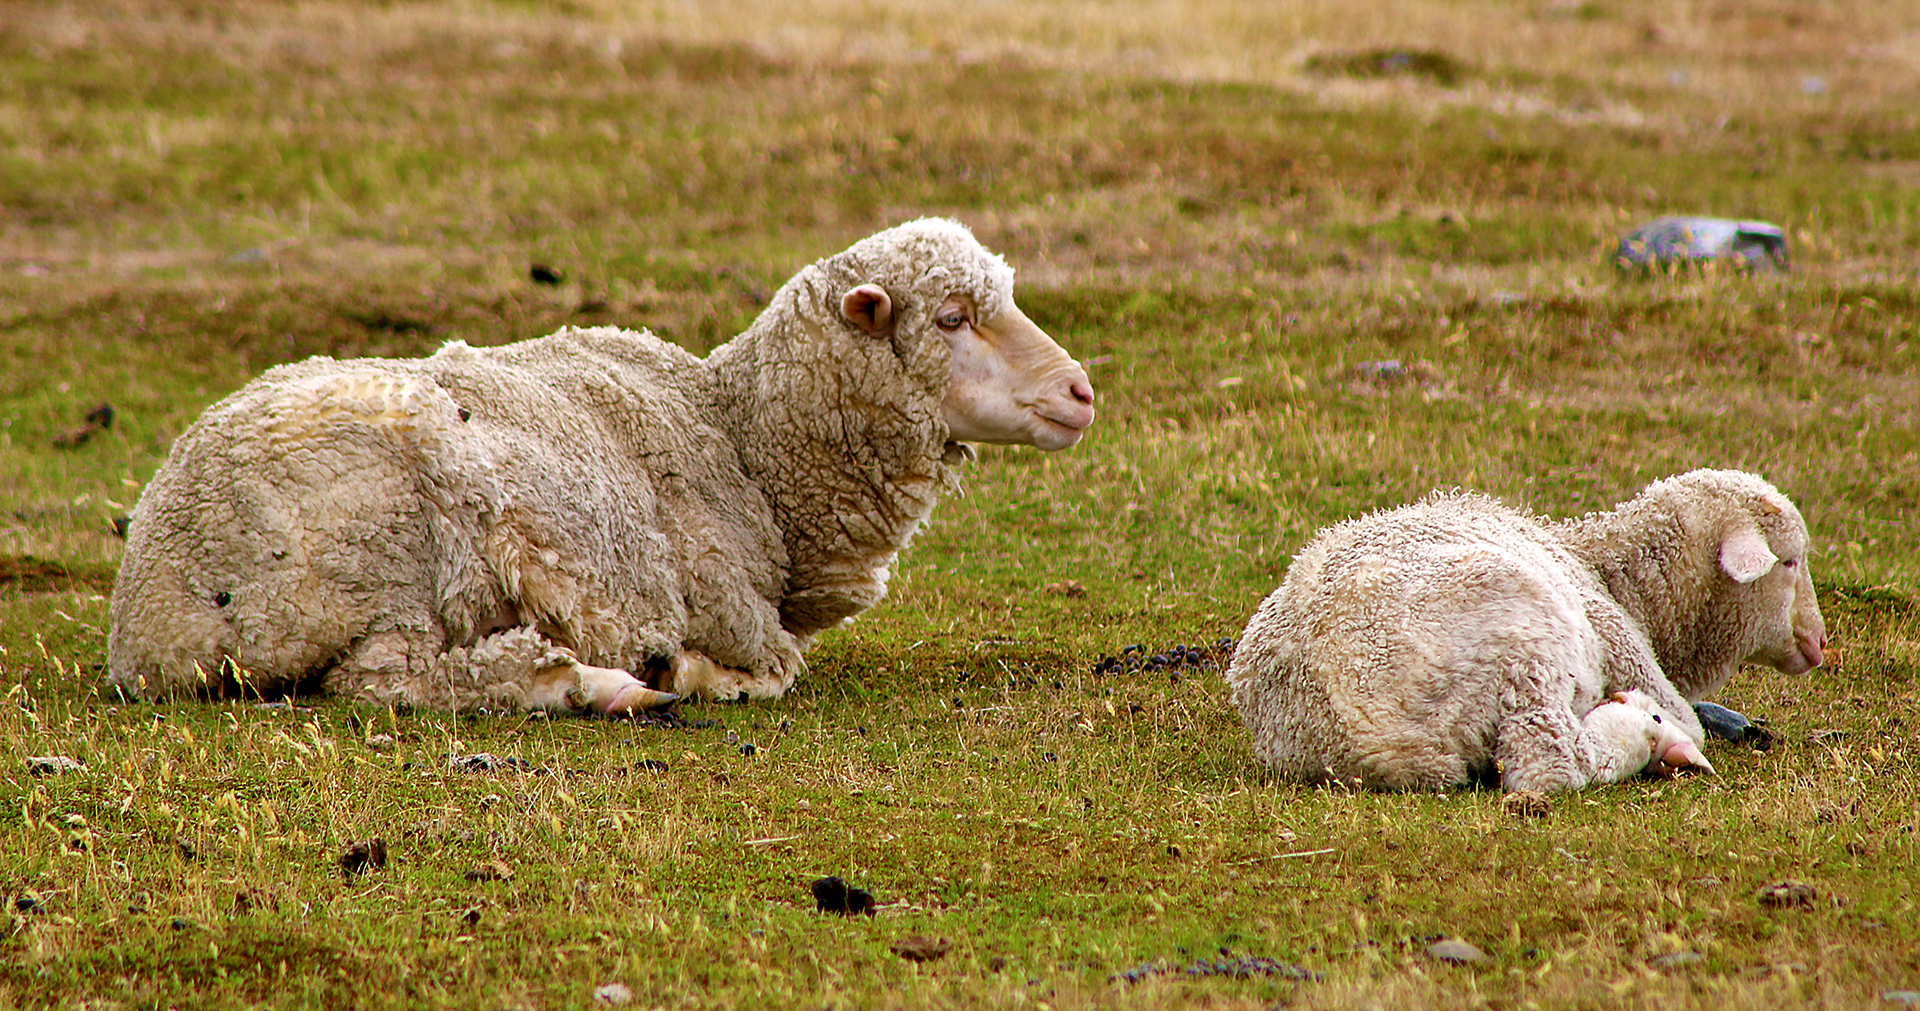 a sheep lying on grass